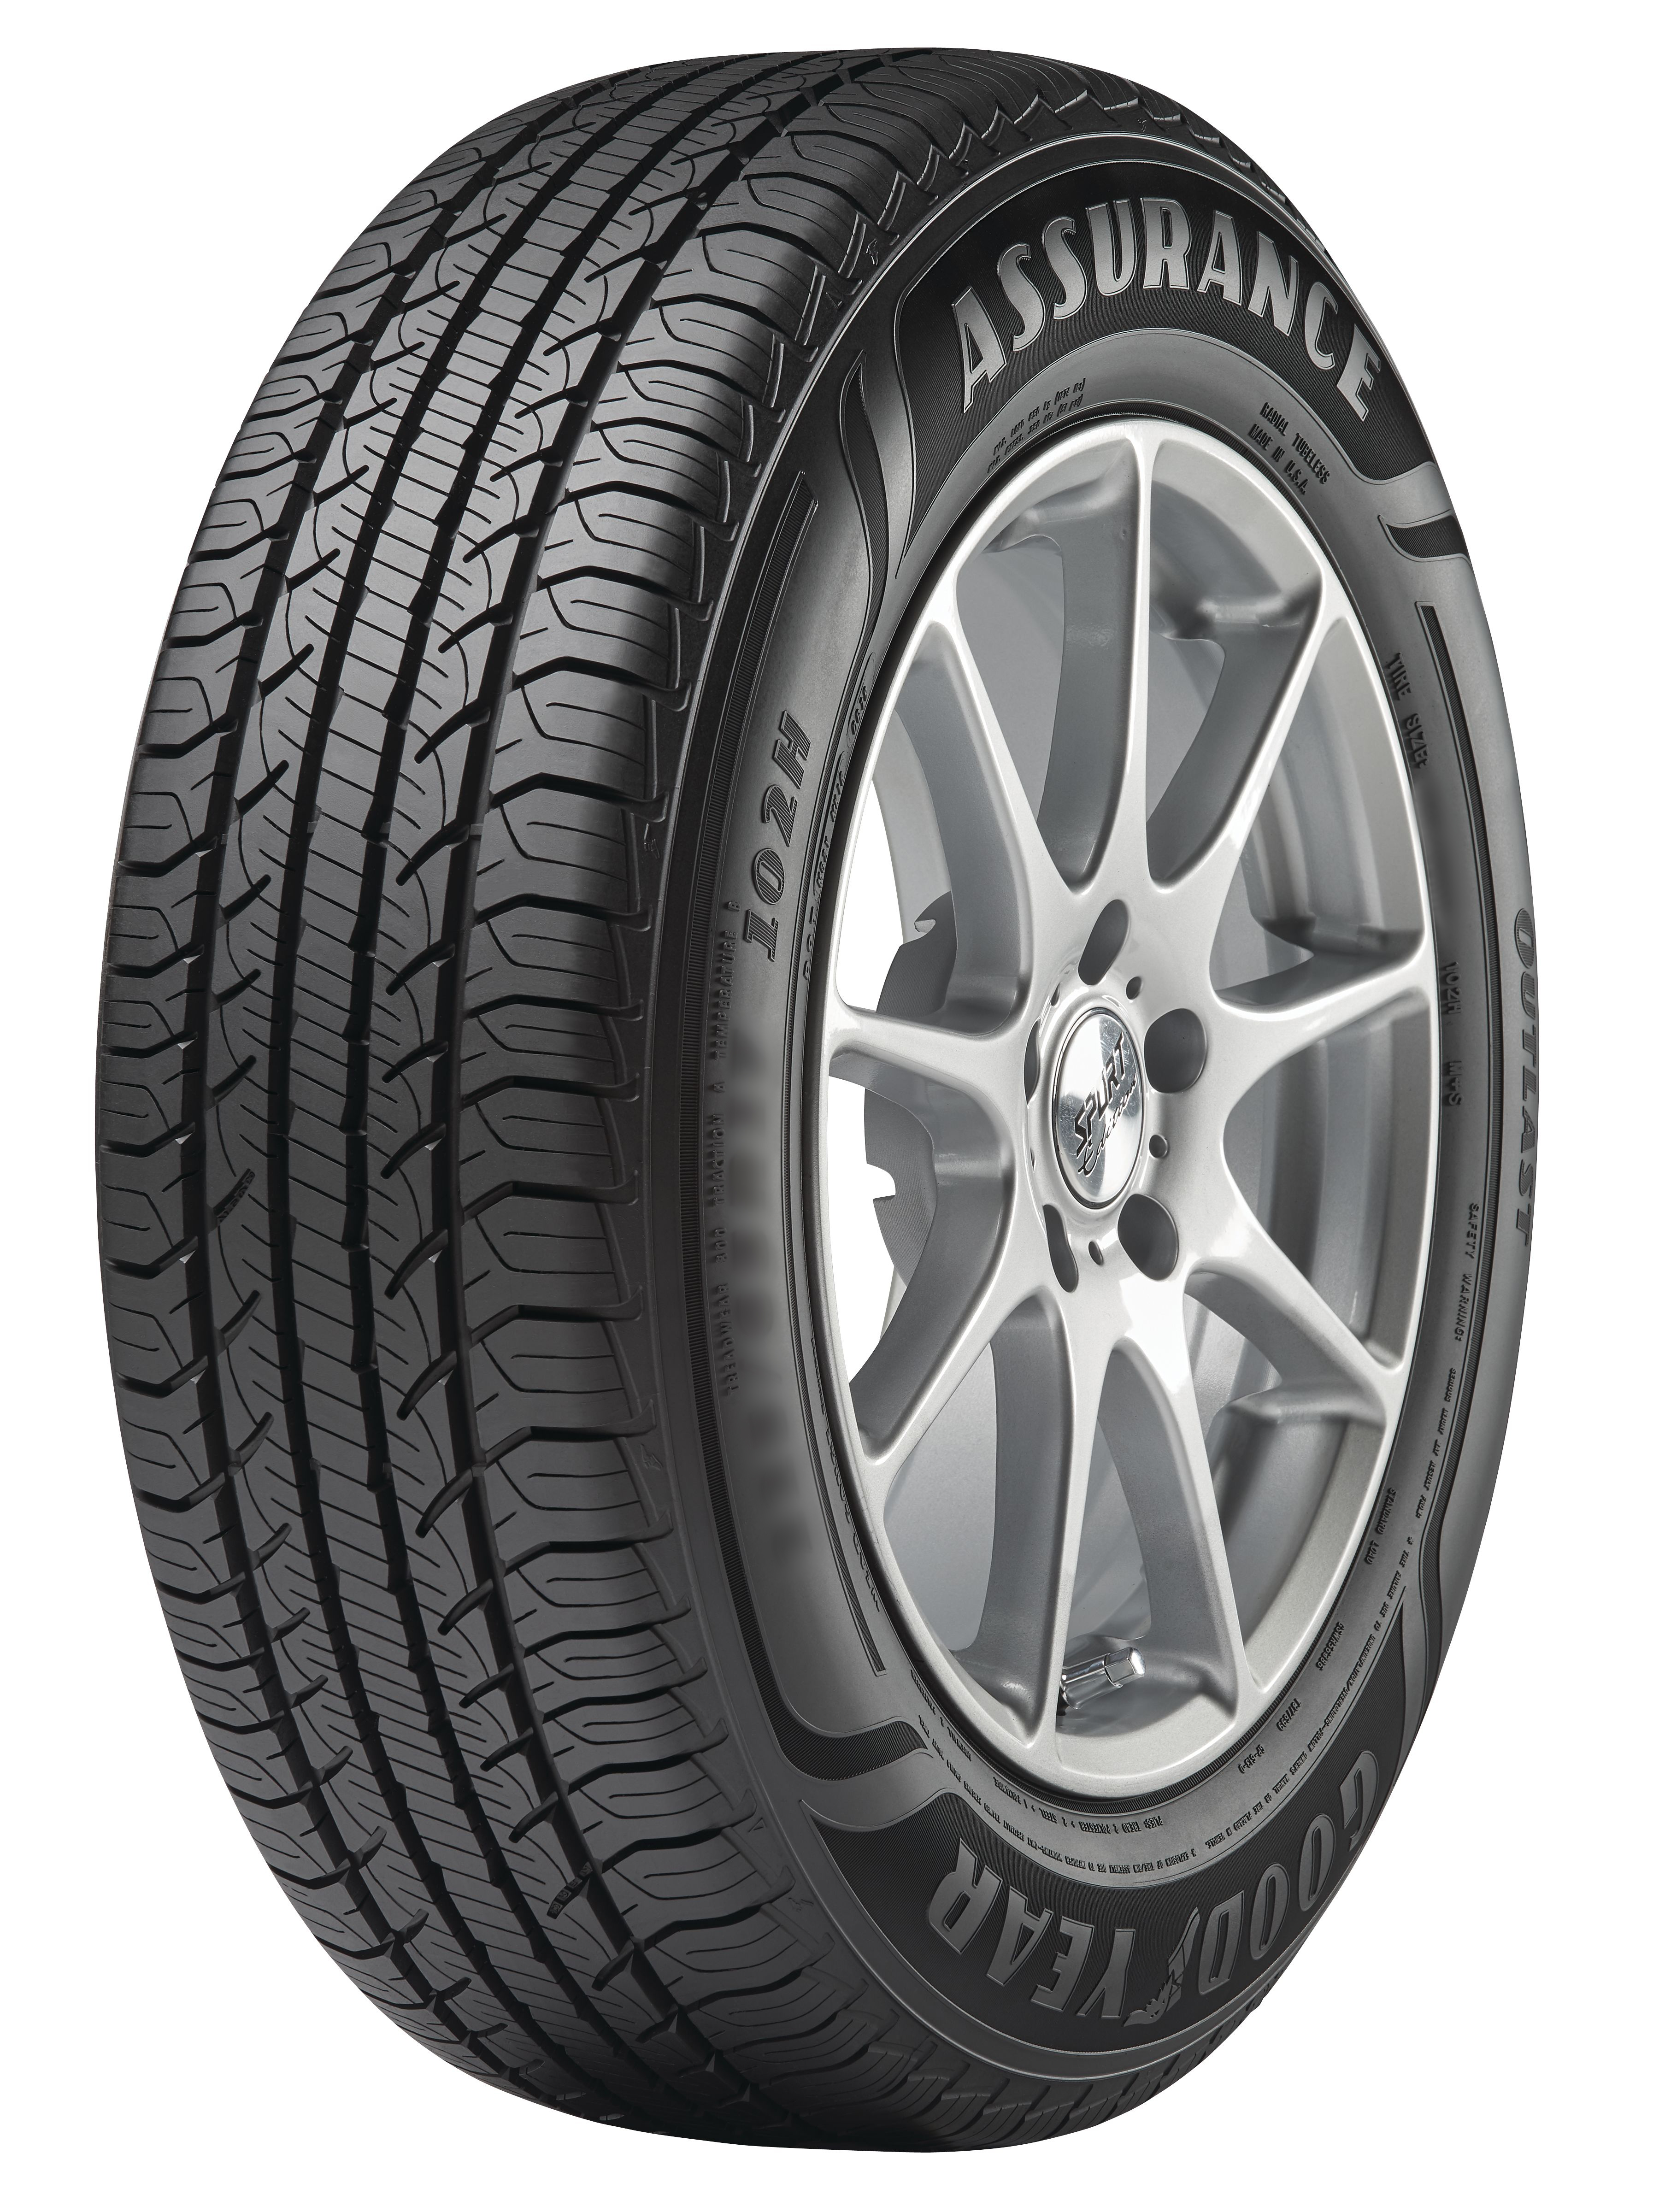 Goodyear Assurance Outlast 215/60R16 95V All-Season Tire - image 1 of 7